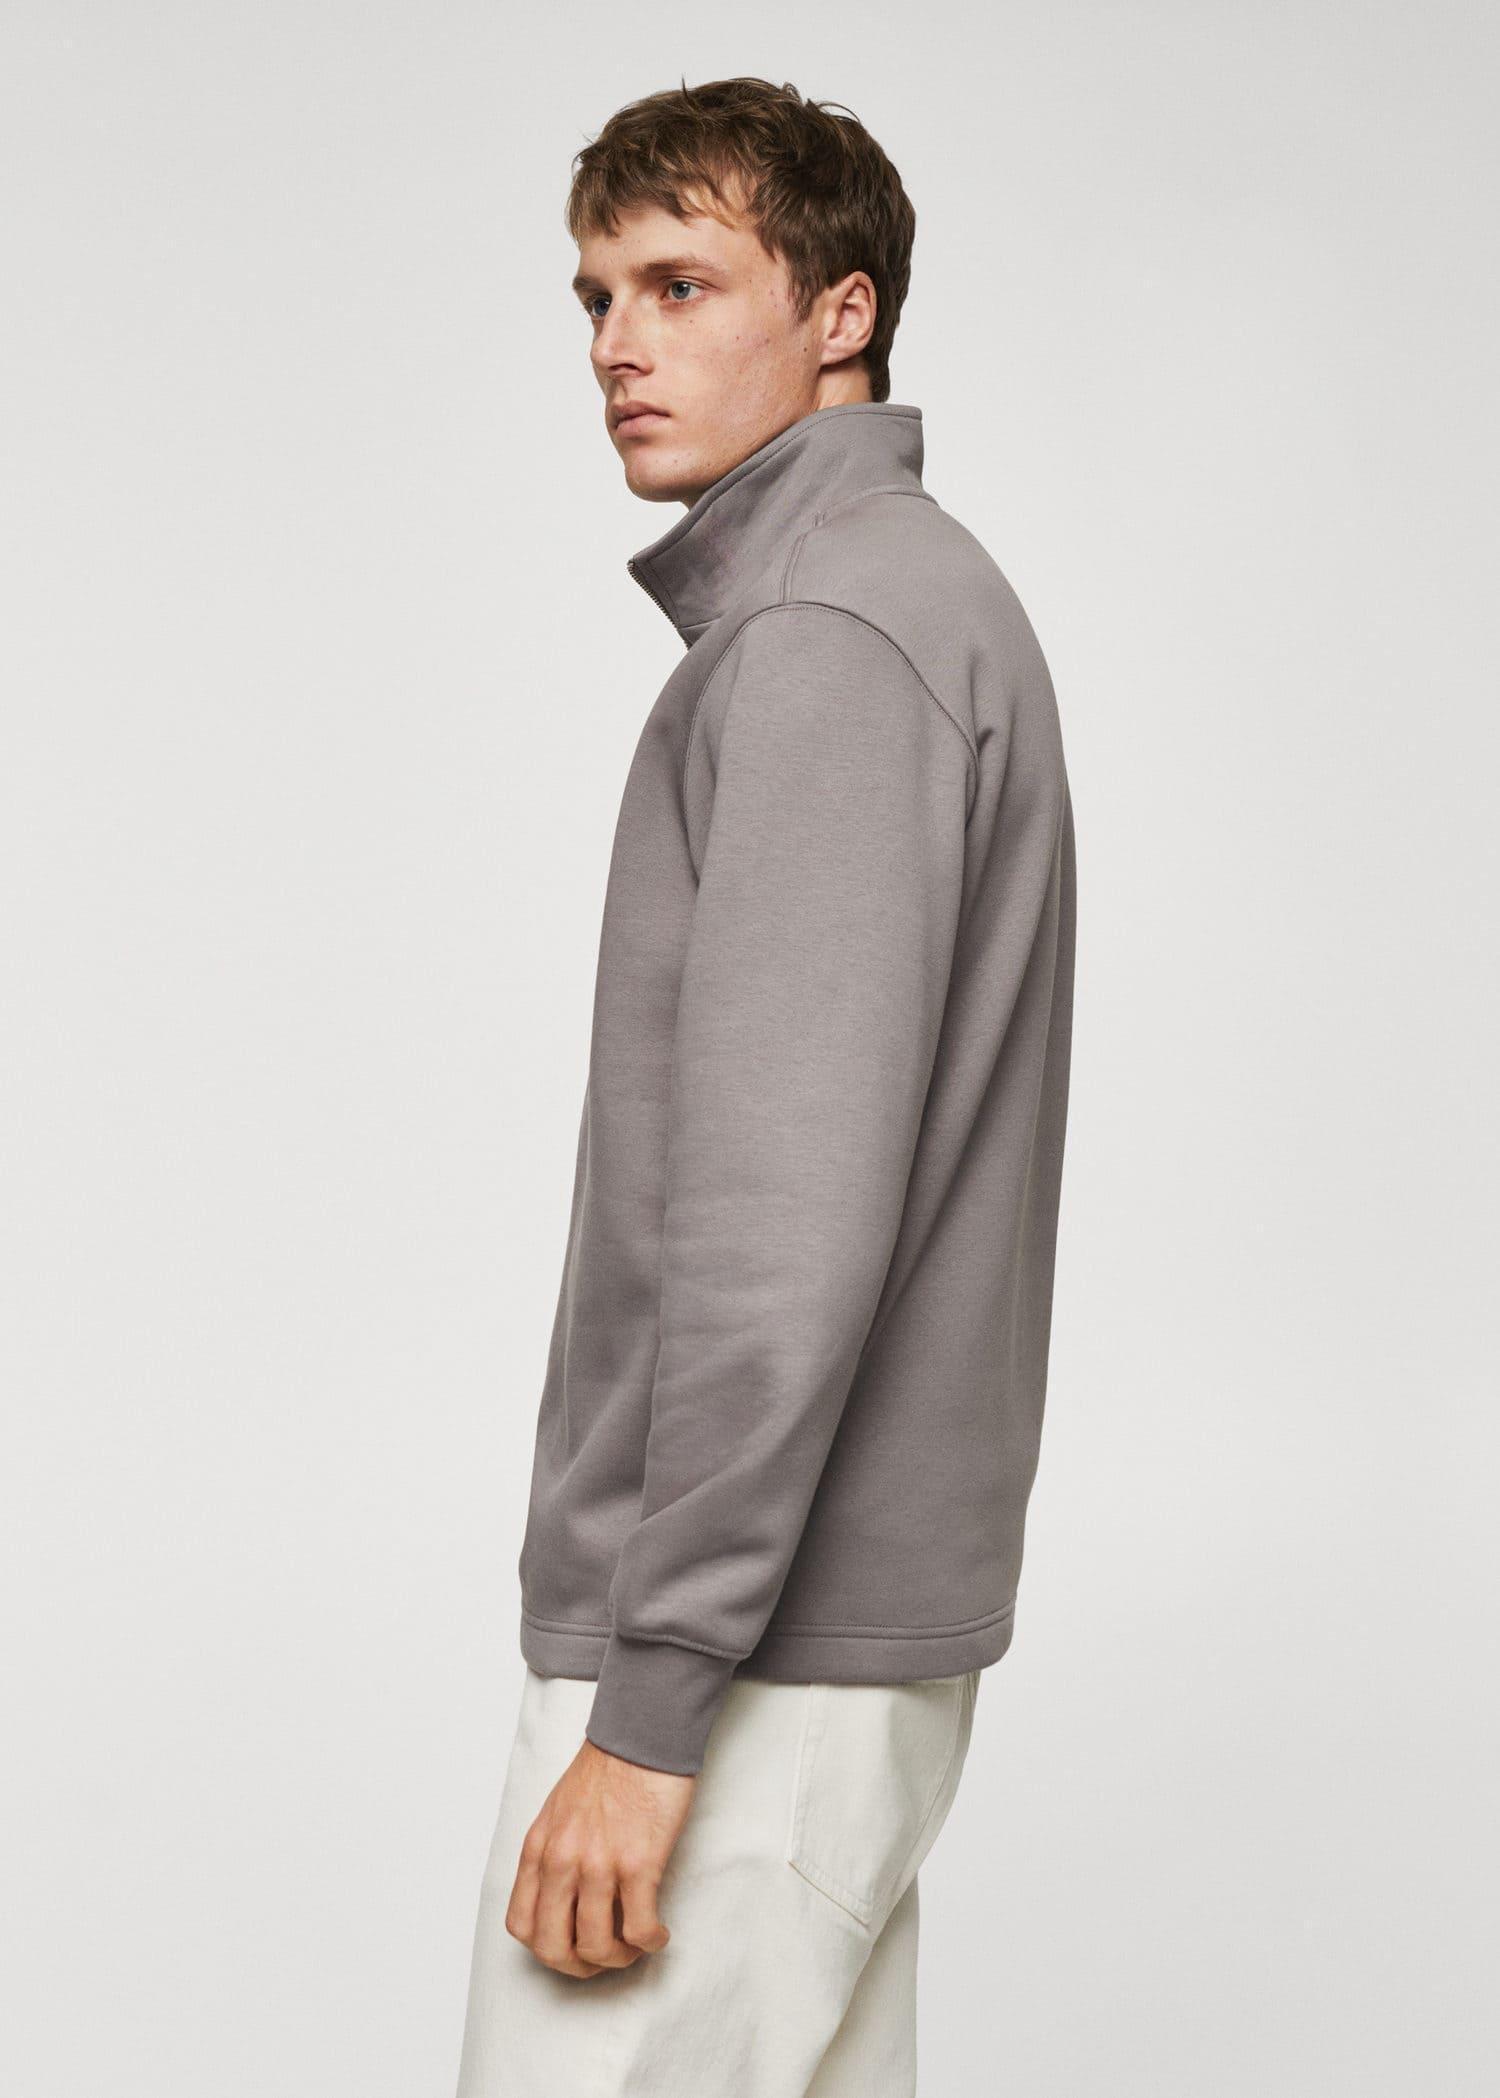 Mango - Grey Cotton Sweatshirt With Zip Neck